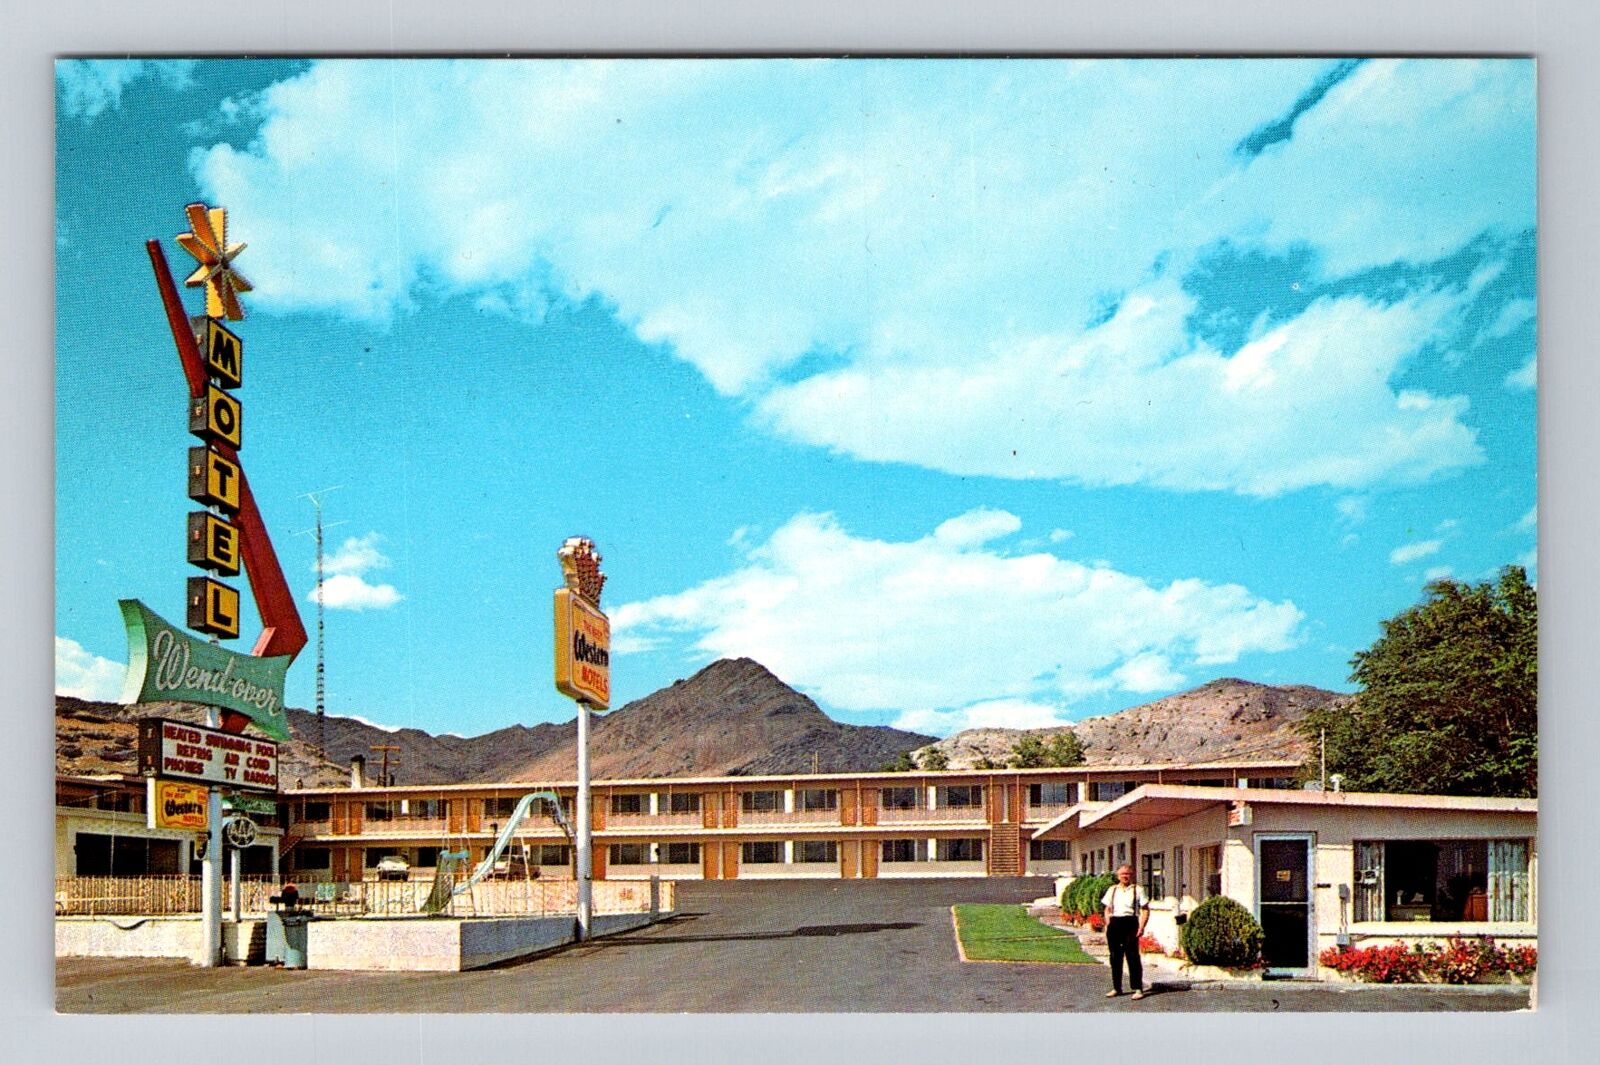 Wendover UT-Utah, Wend-Over Motel Advertising, Vintage Souvenir Postcard